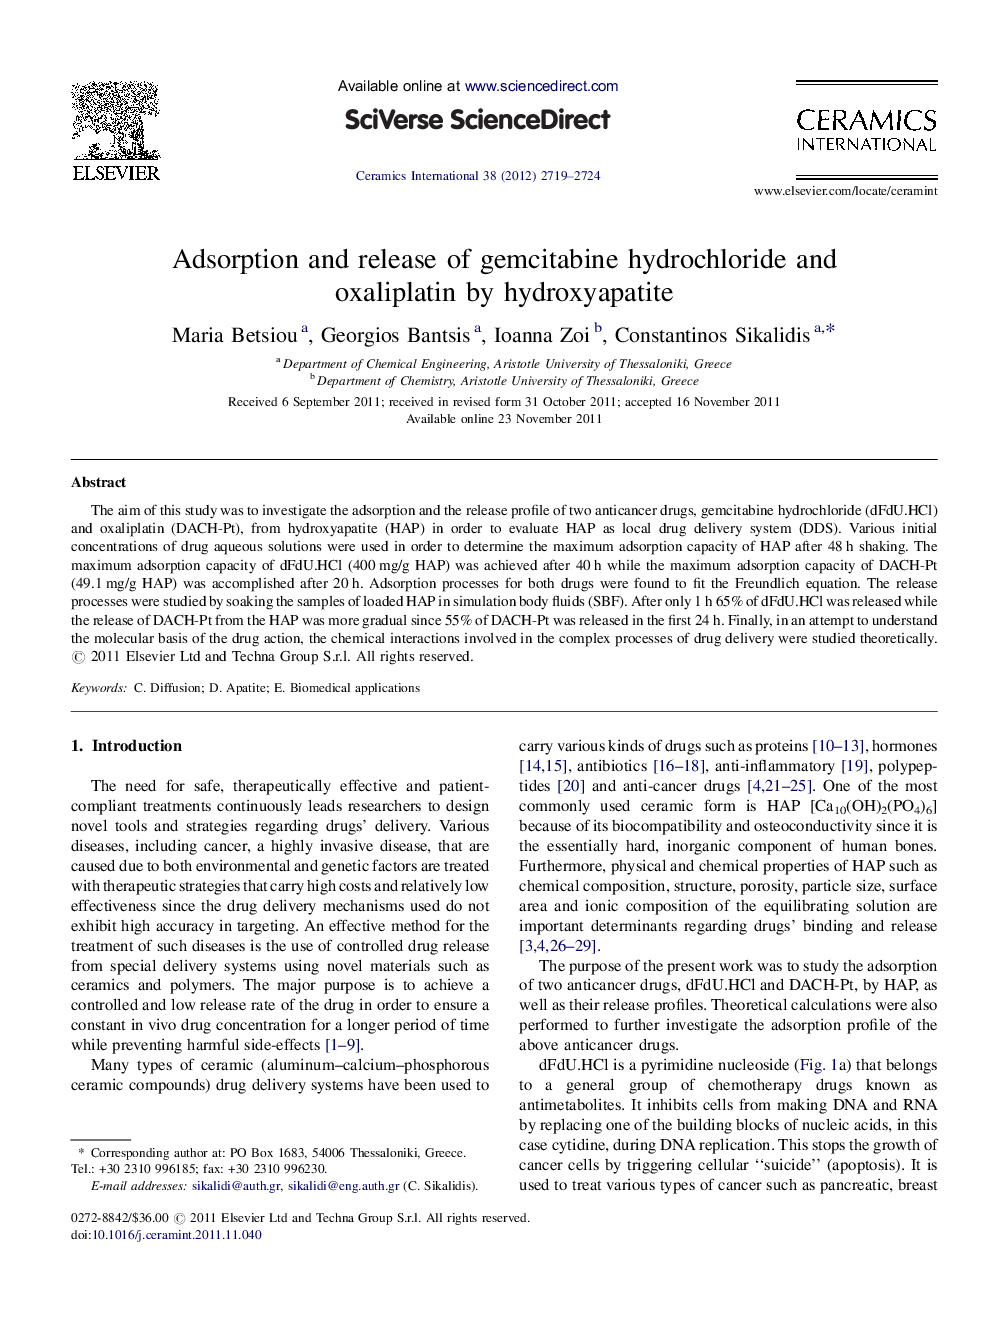 Adsorption and release of gemcitabine hydrochloride and oxaliplatin by hydroxyapatite